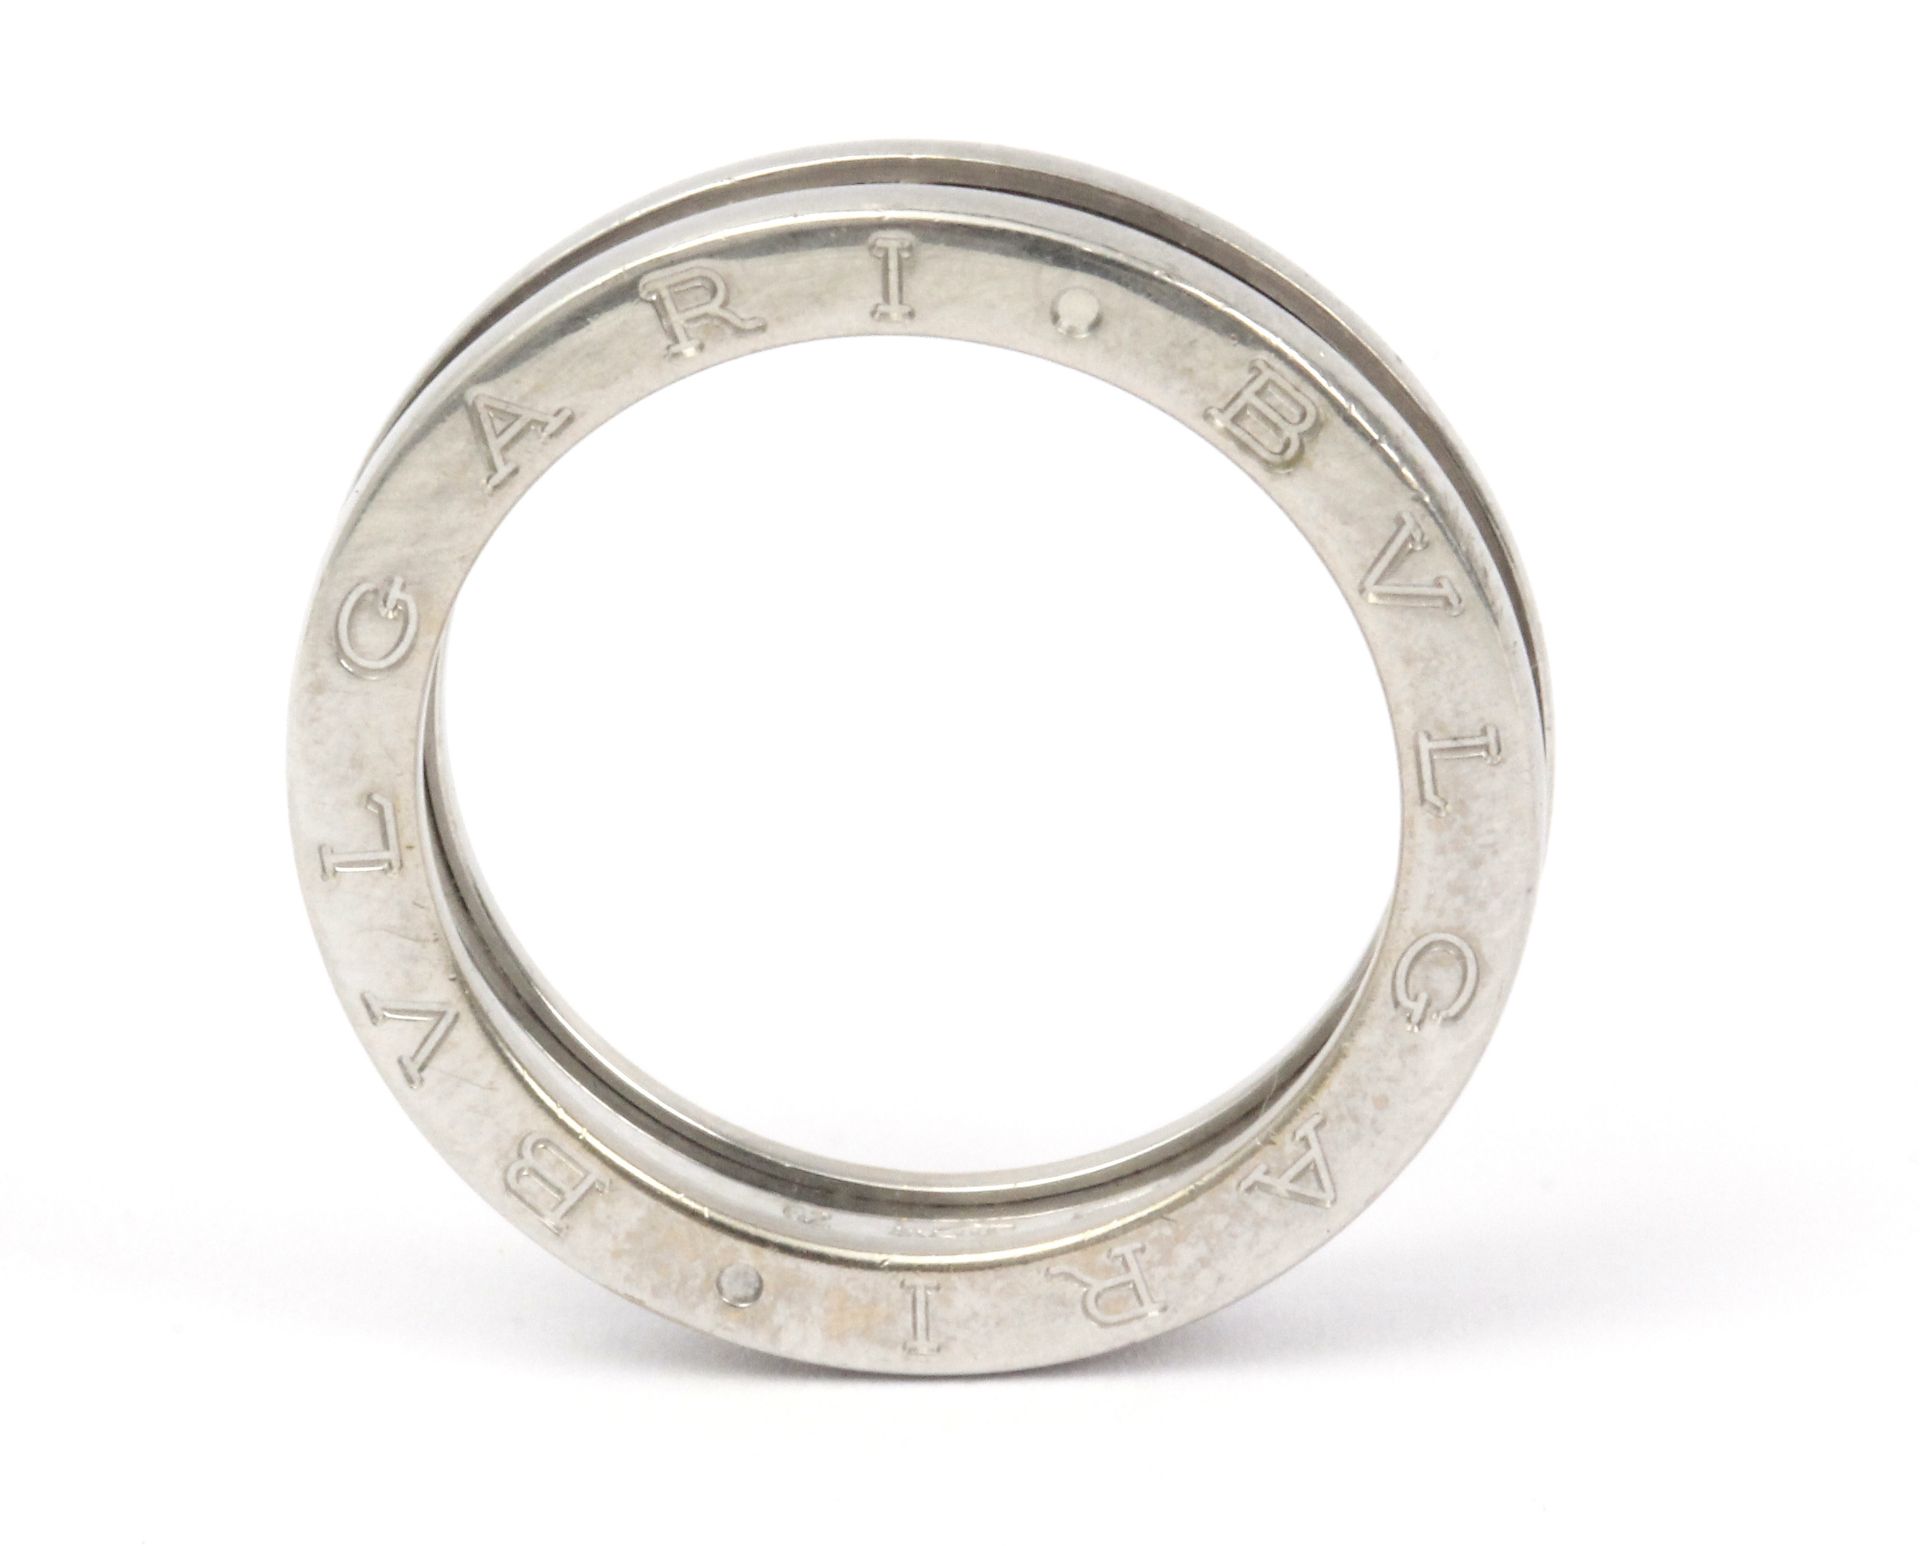 Bvlgari. B Zero 1. 18 k. white gold ring - Image 2 of 3